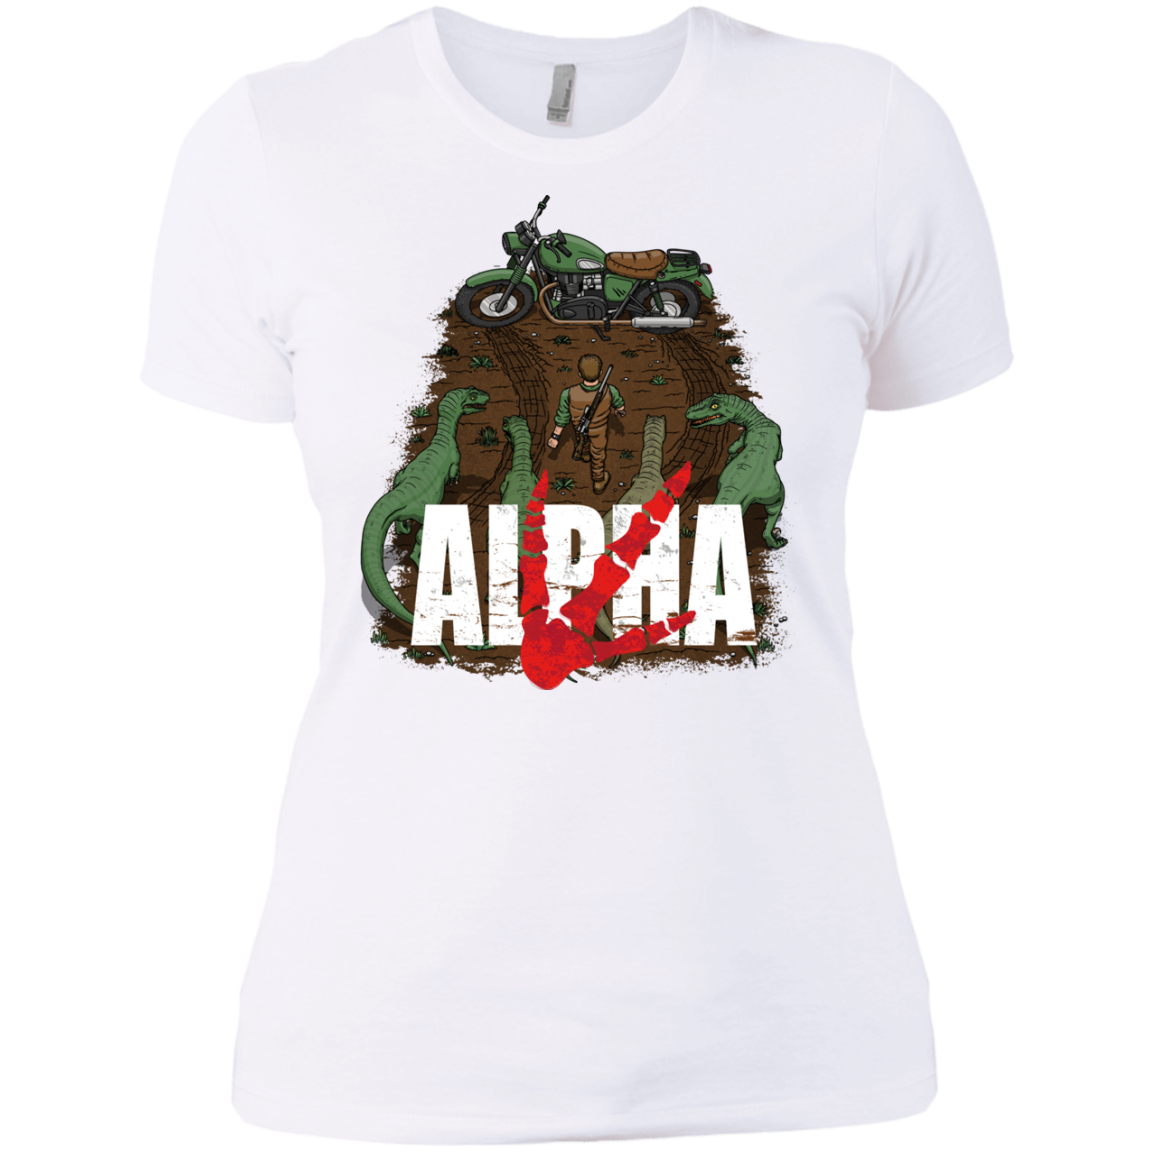 Akira Park Women's Premium T-Shirt